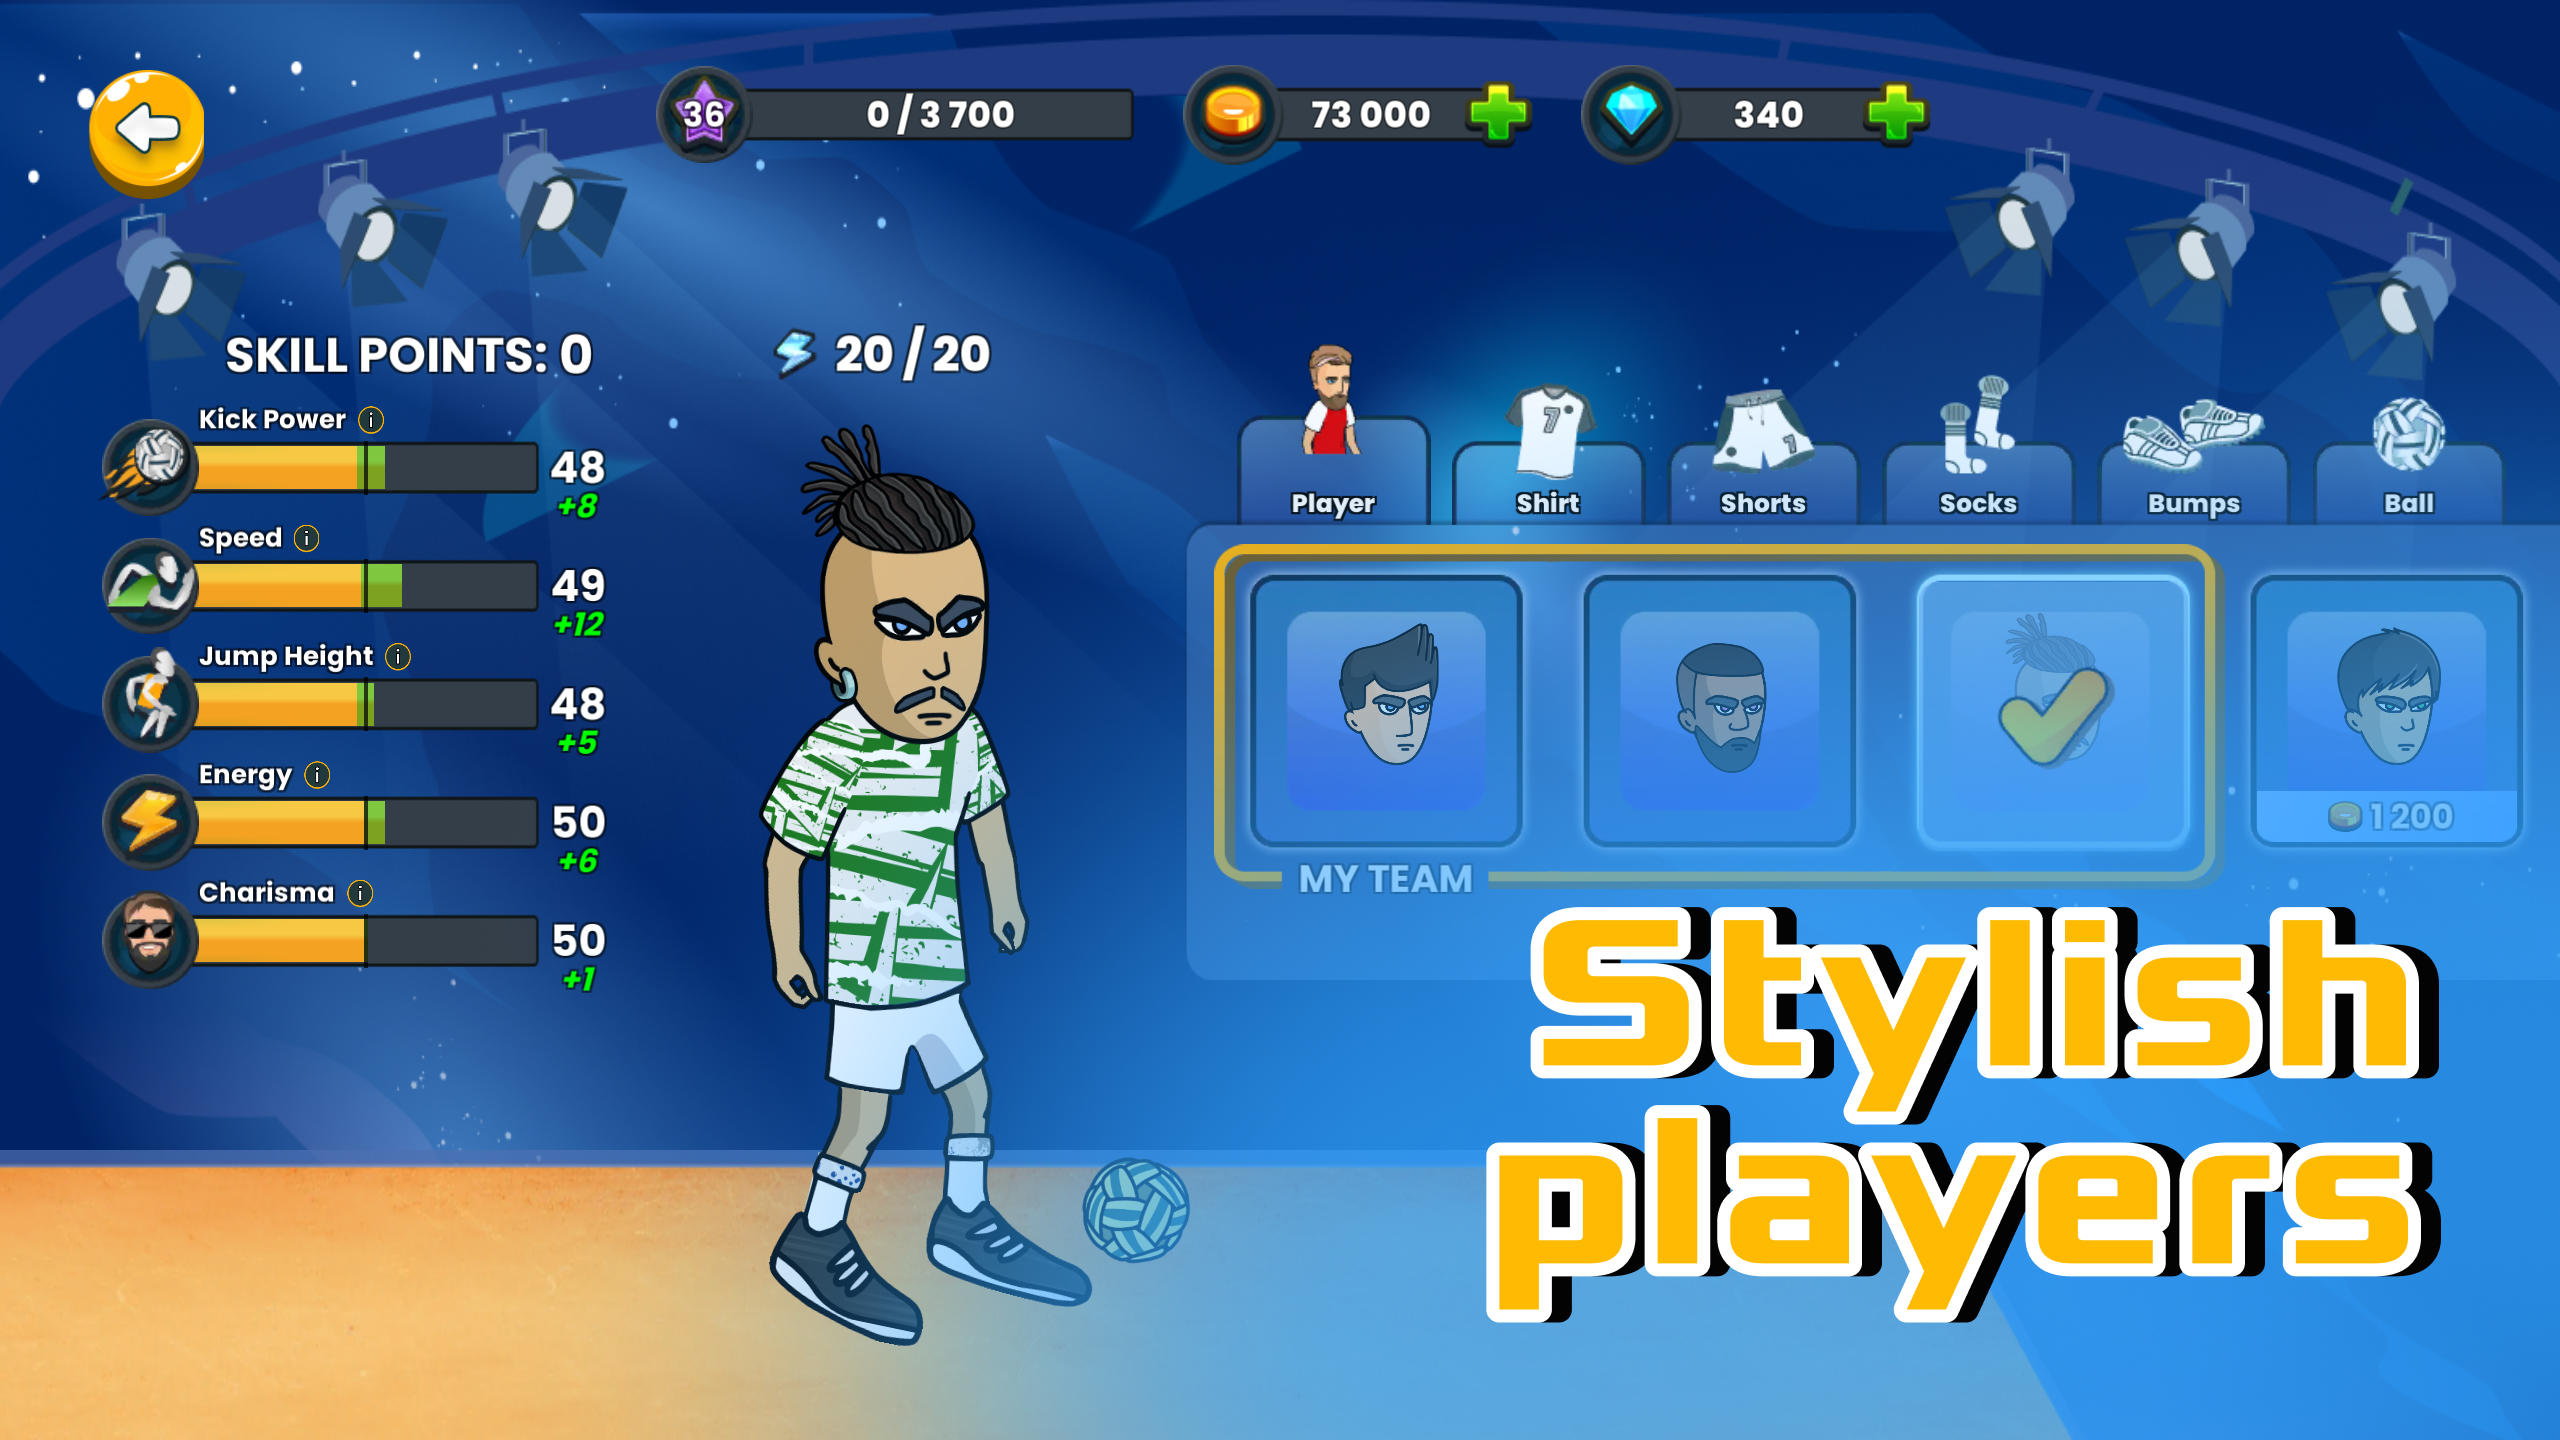 Y8 Football League Sports Game APK (Android Game) - Baixar Grátis